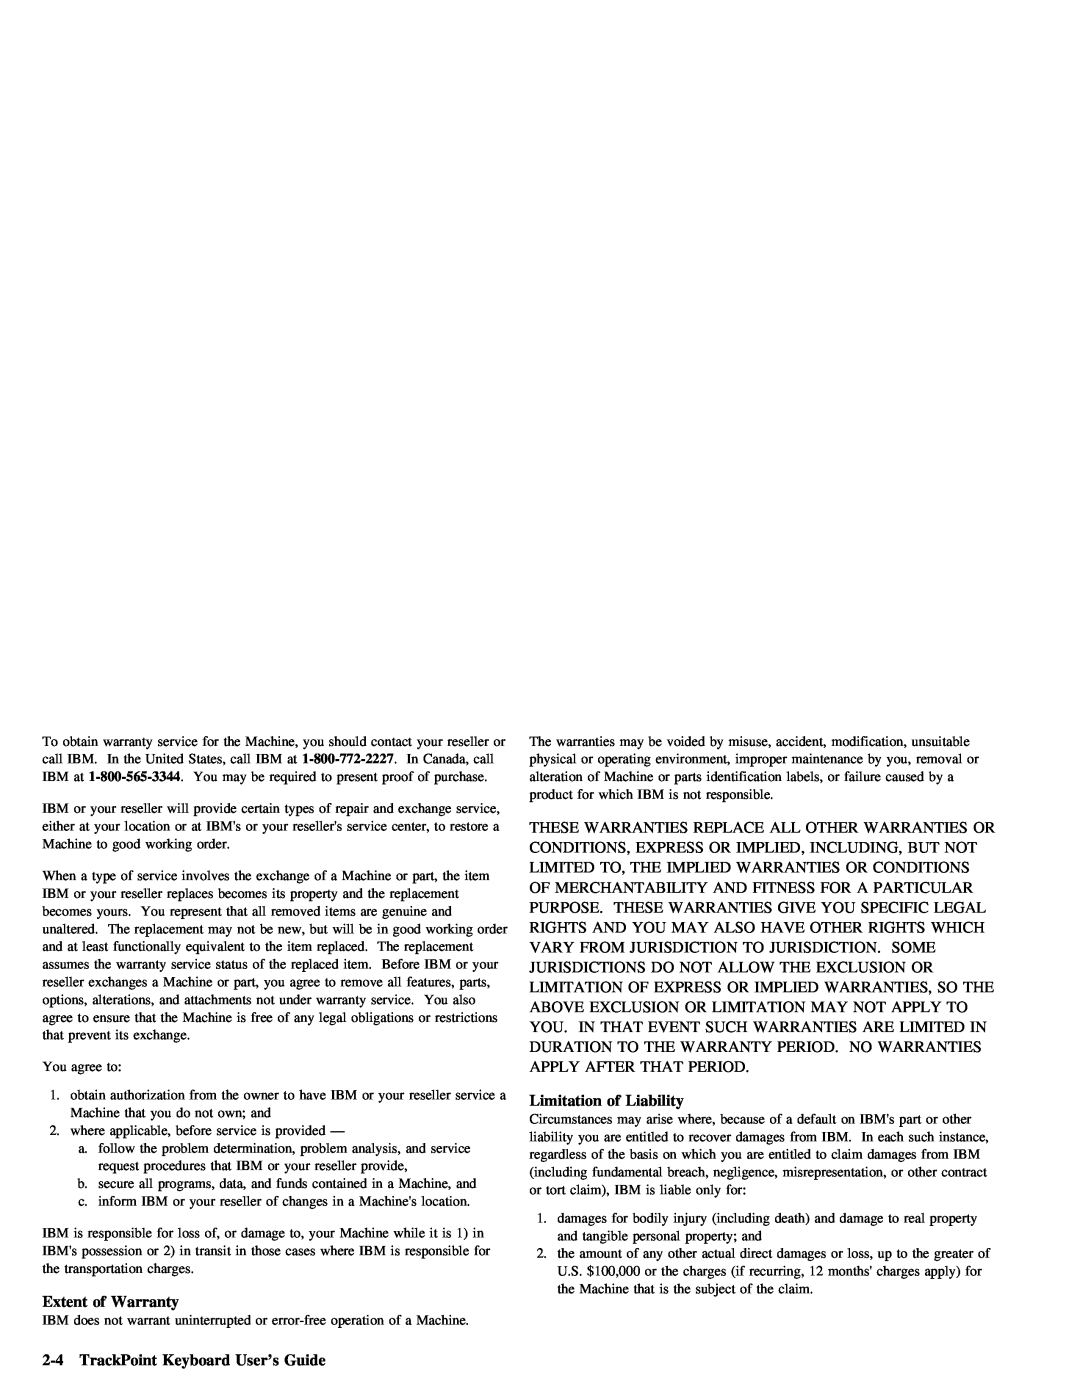 IBM Partner Pavilion TrackPoint manual Liability, Extent 